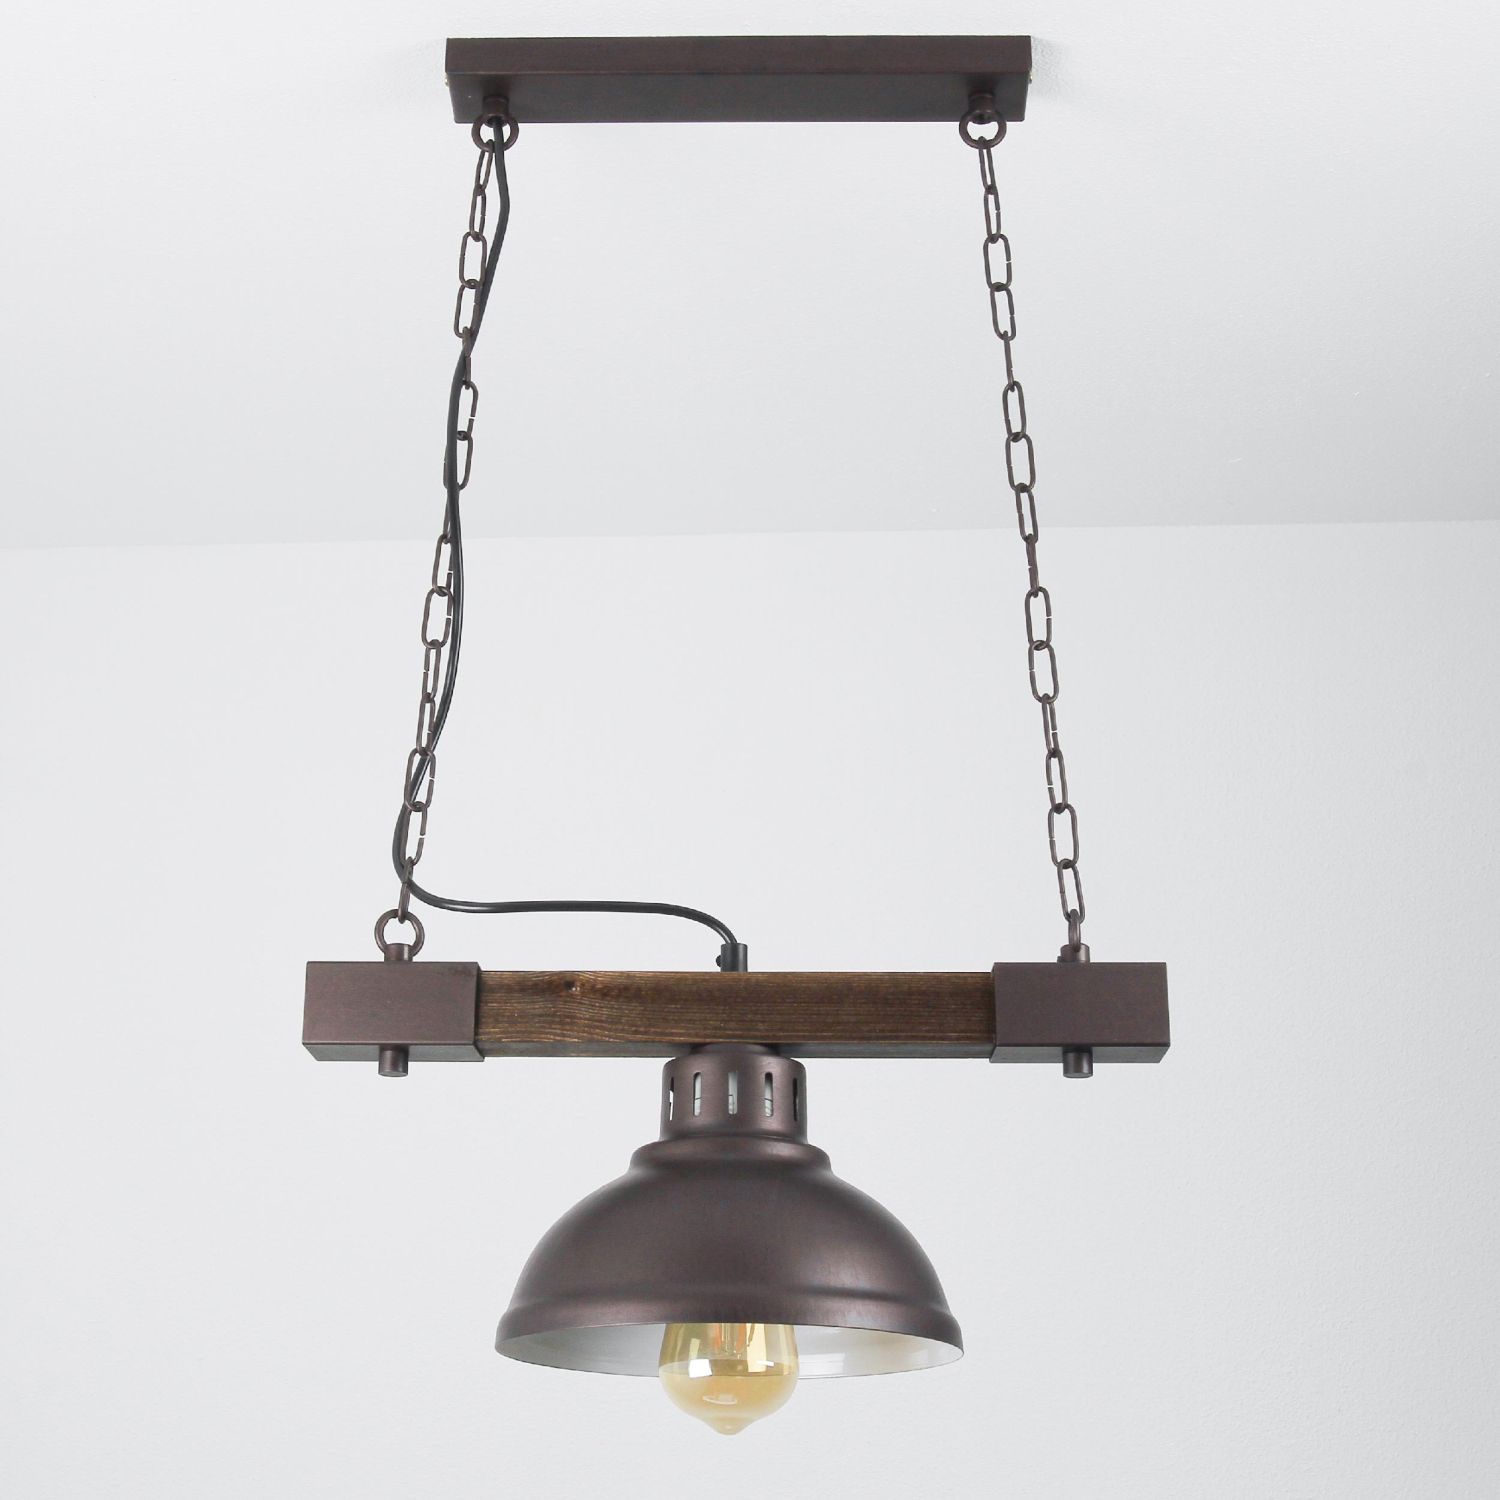 HAKON Lampe hängend Echt Holz Braun Metall Vintage